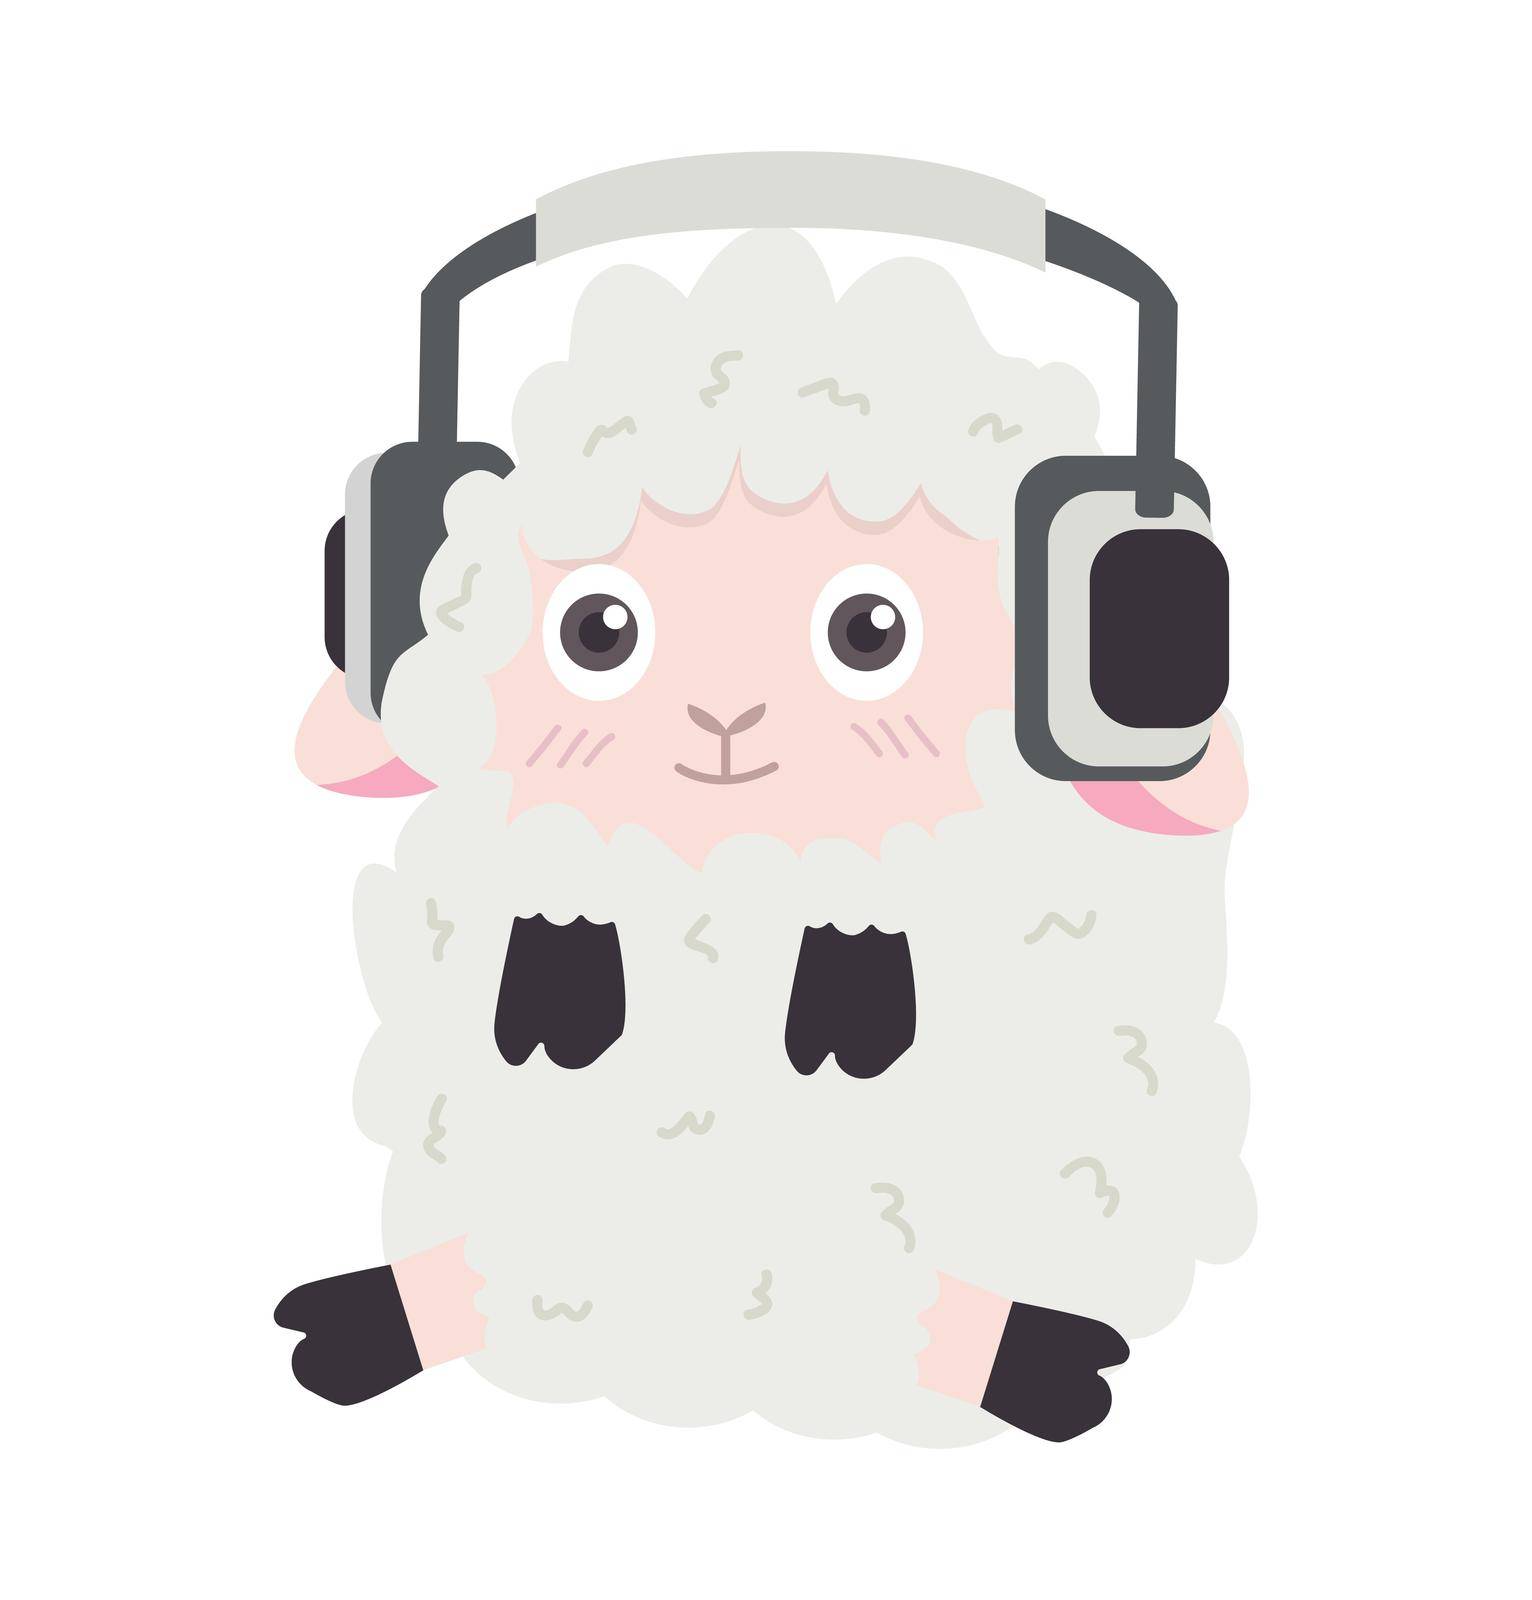 little sheep  listening music in headphones cartoon by focus_bell